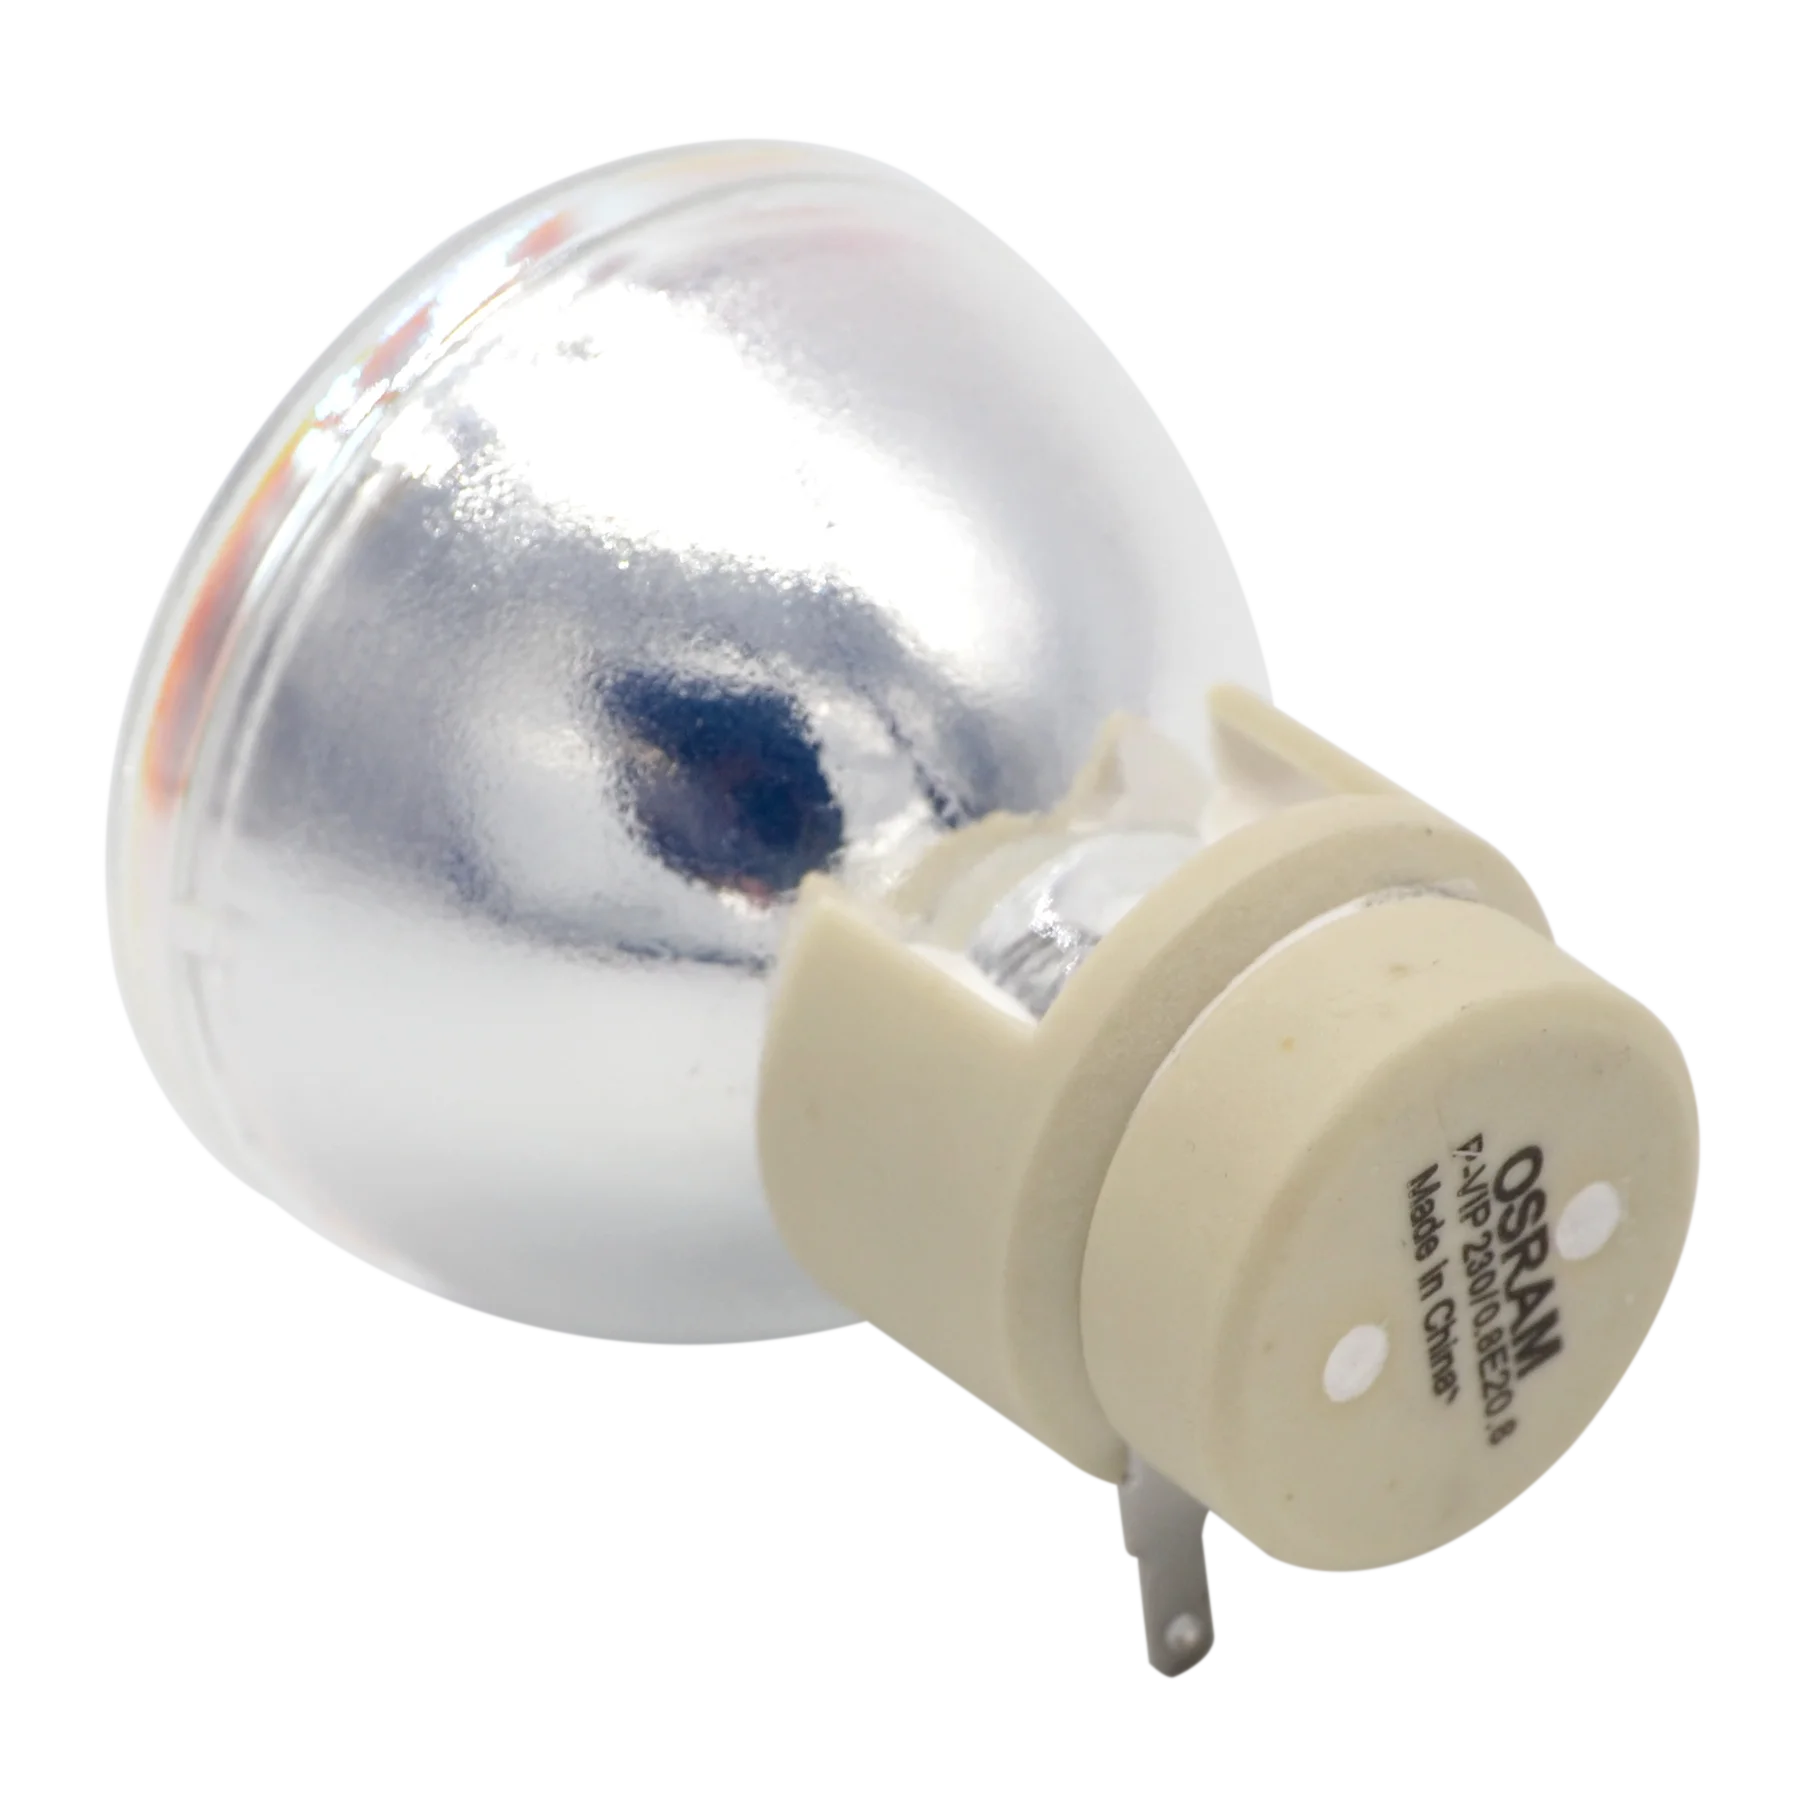 Magas Minőségű SP-LAMP-083 Projektor Lámpa P-VIP 230/0.8 E20.8 INFOCUS IN124 IN124ST IN125 IN126 IN126ST IN2124